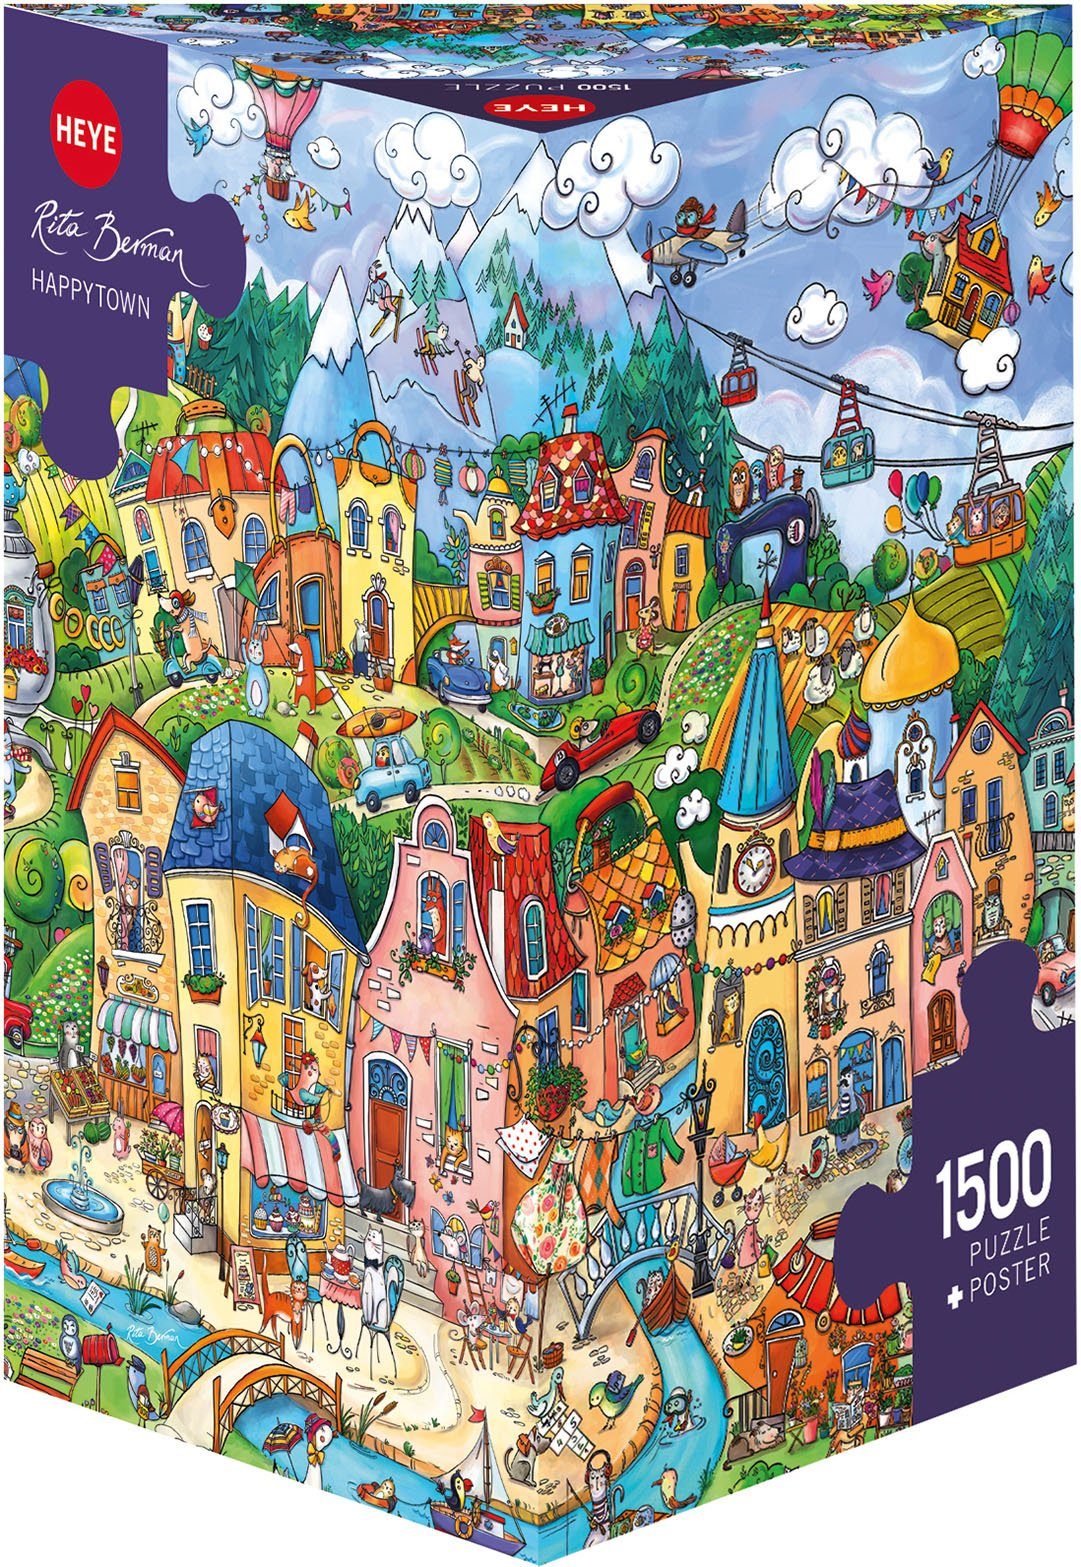 HEYE Puzzle Happytown, Berman, 1500 Puzzleteile, Made in Europe